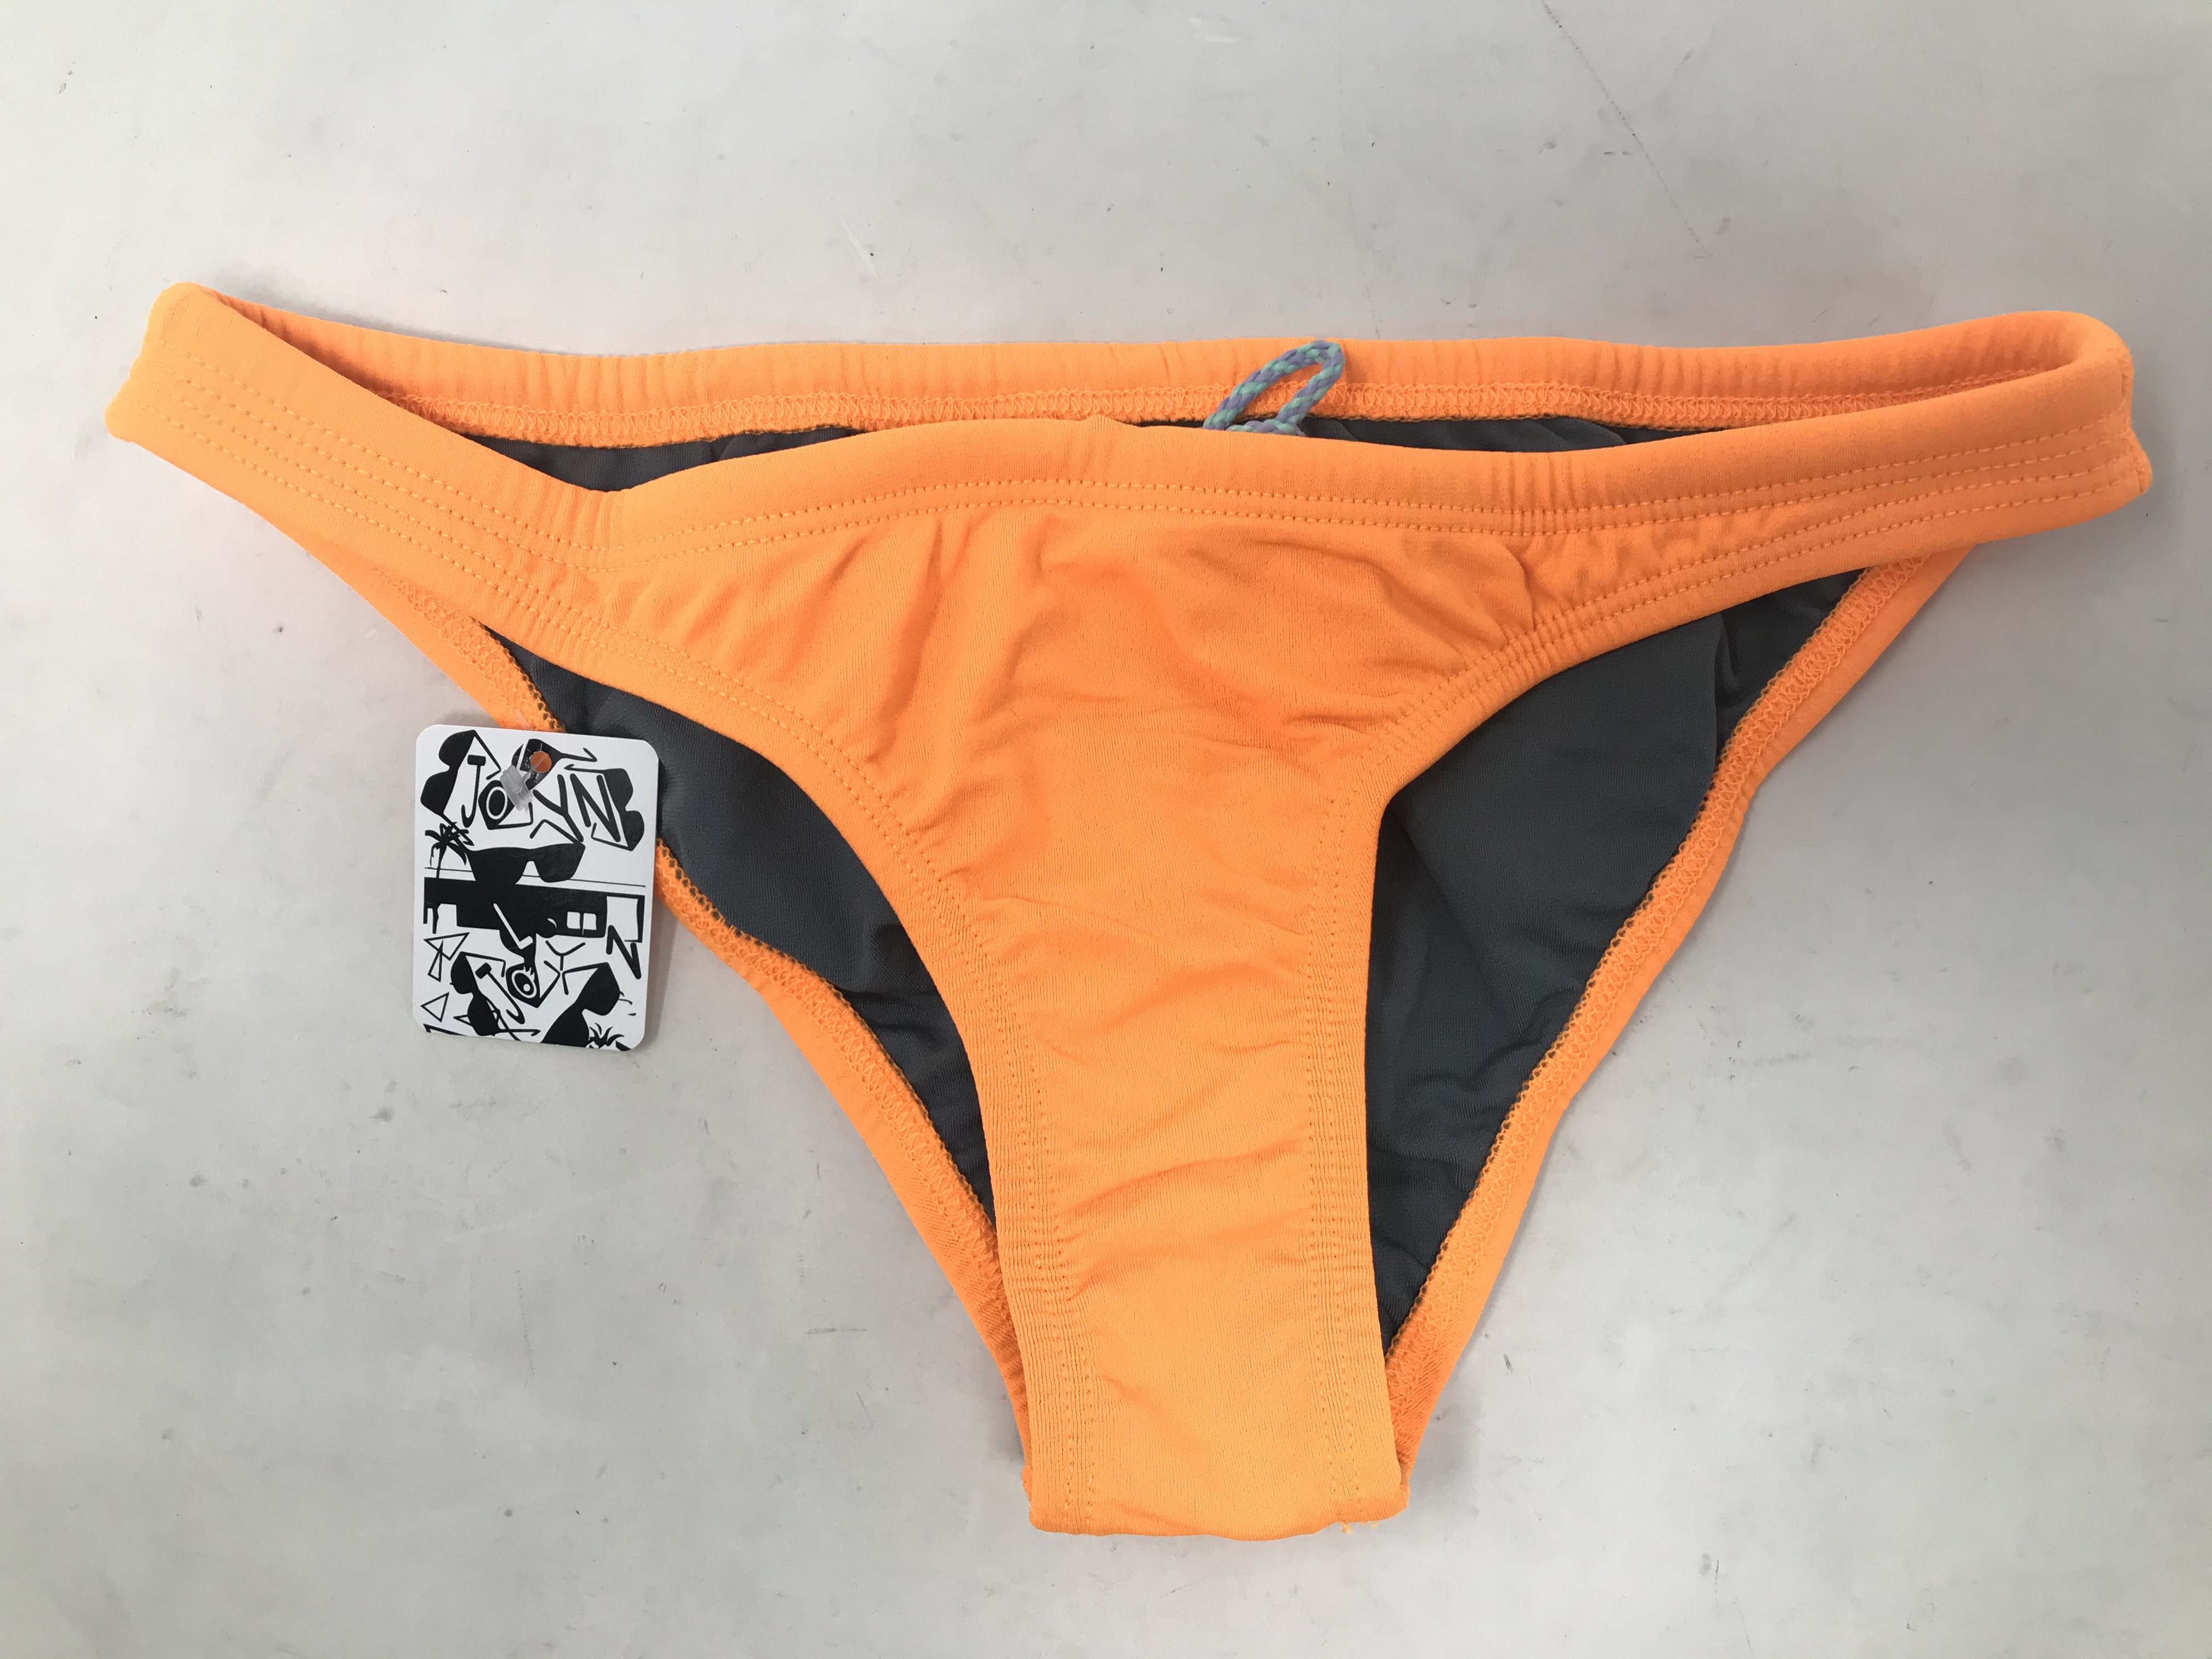 Jolyn Bikini Bottom Large EUR style Drawstring NWT Citrus Orange Neon ...